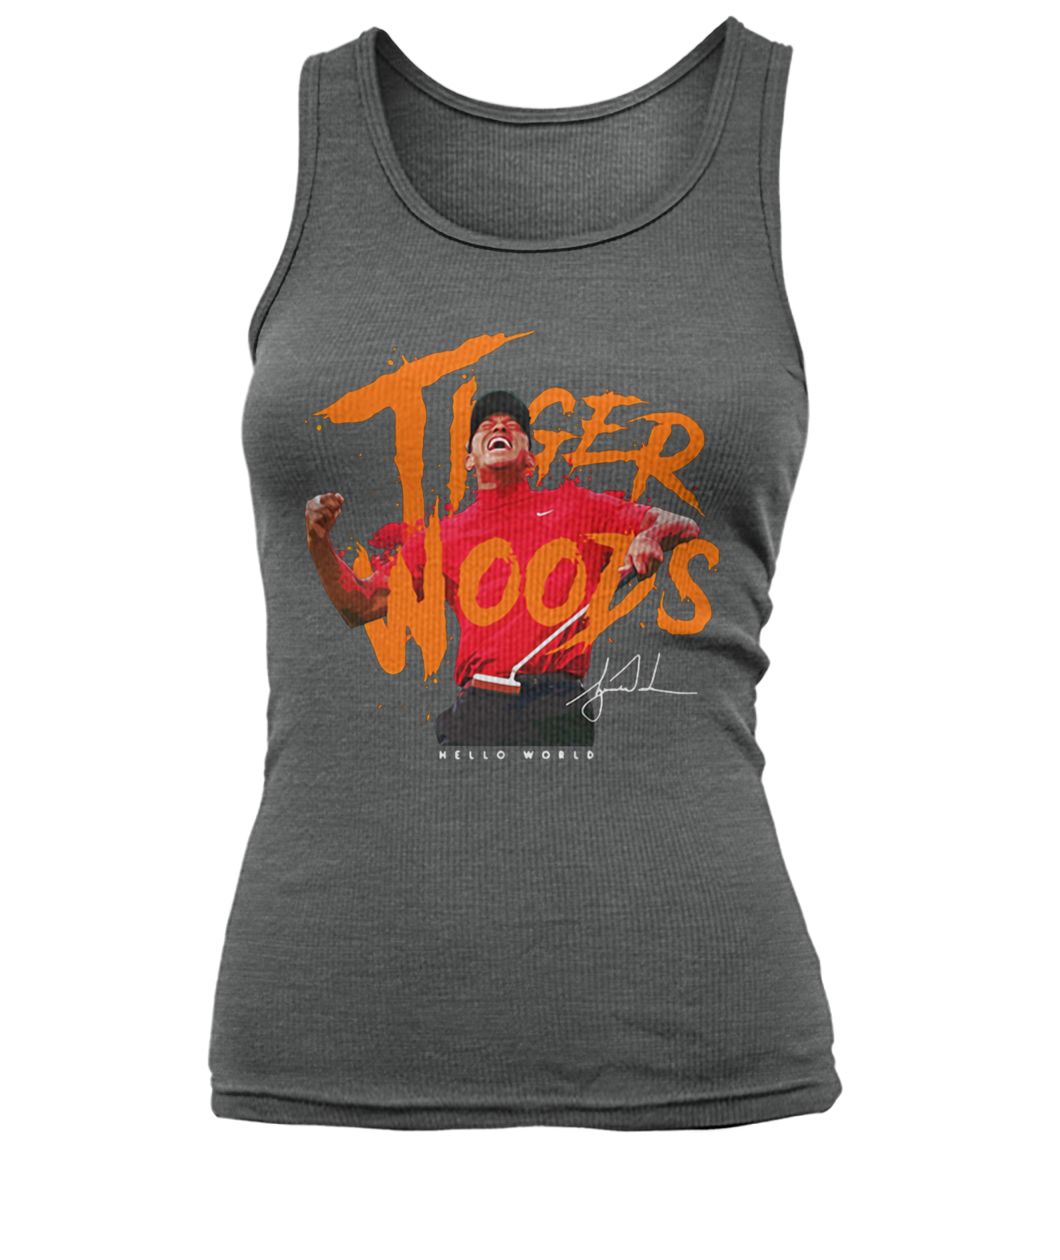 Tiger woods hello world signature women's tank top